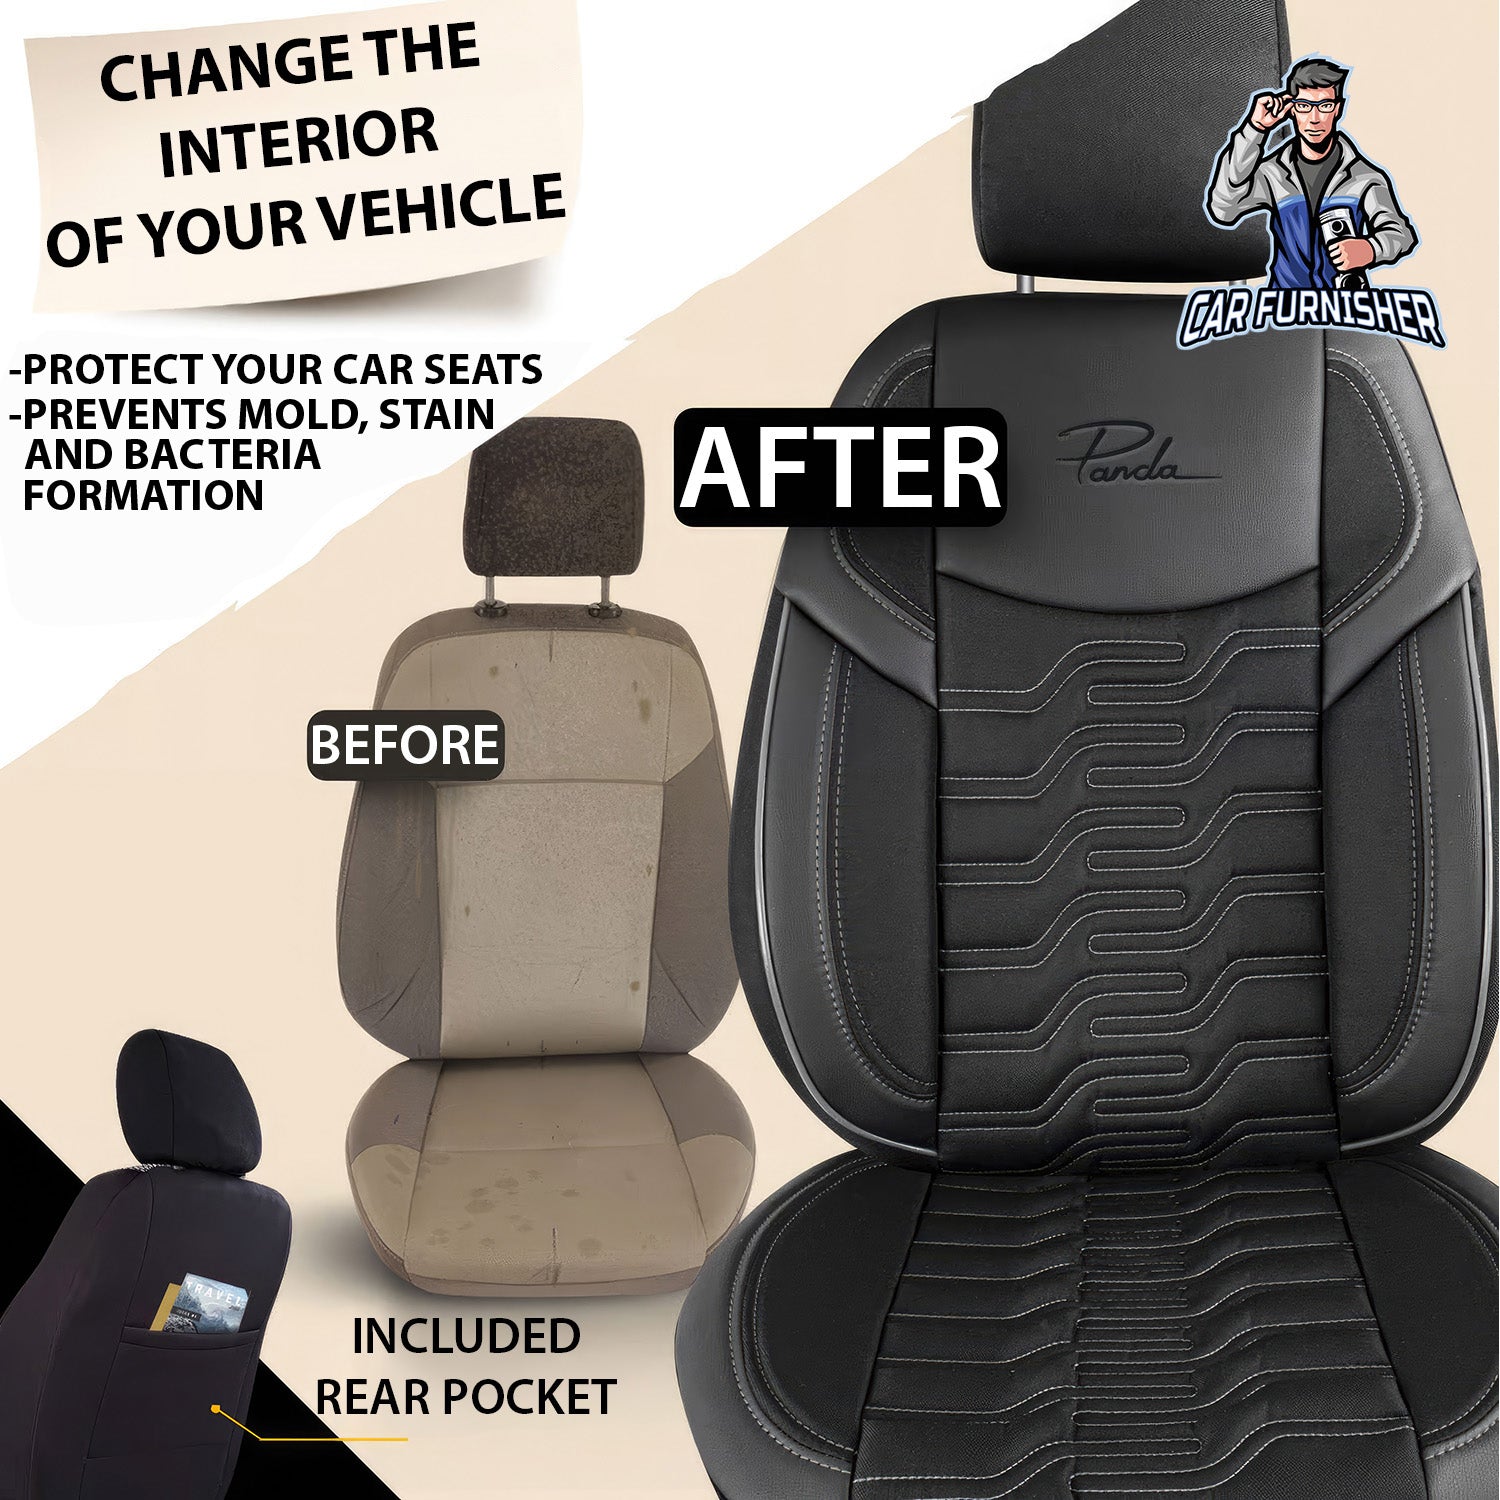 Car Seat Cover Set - Berlin Design Smoked Black 5 Seats + Headrests (Full Set) Leather & Jacquard Fabric